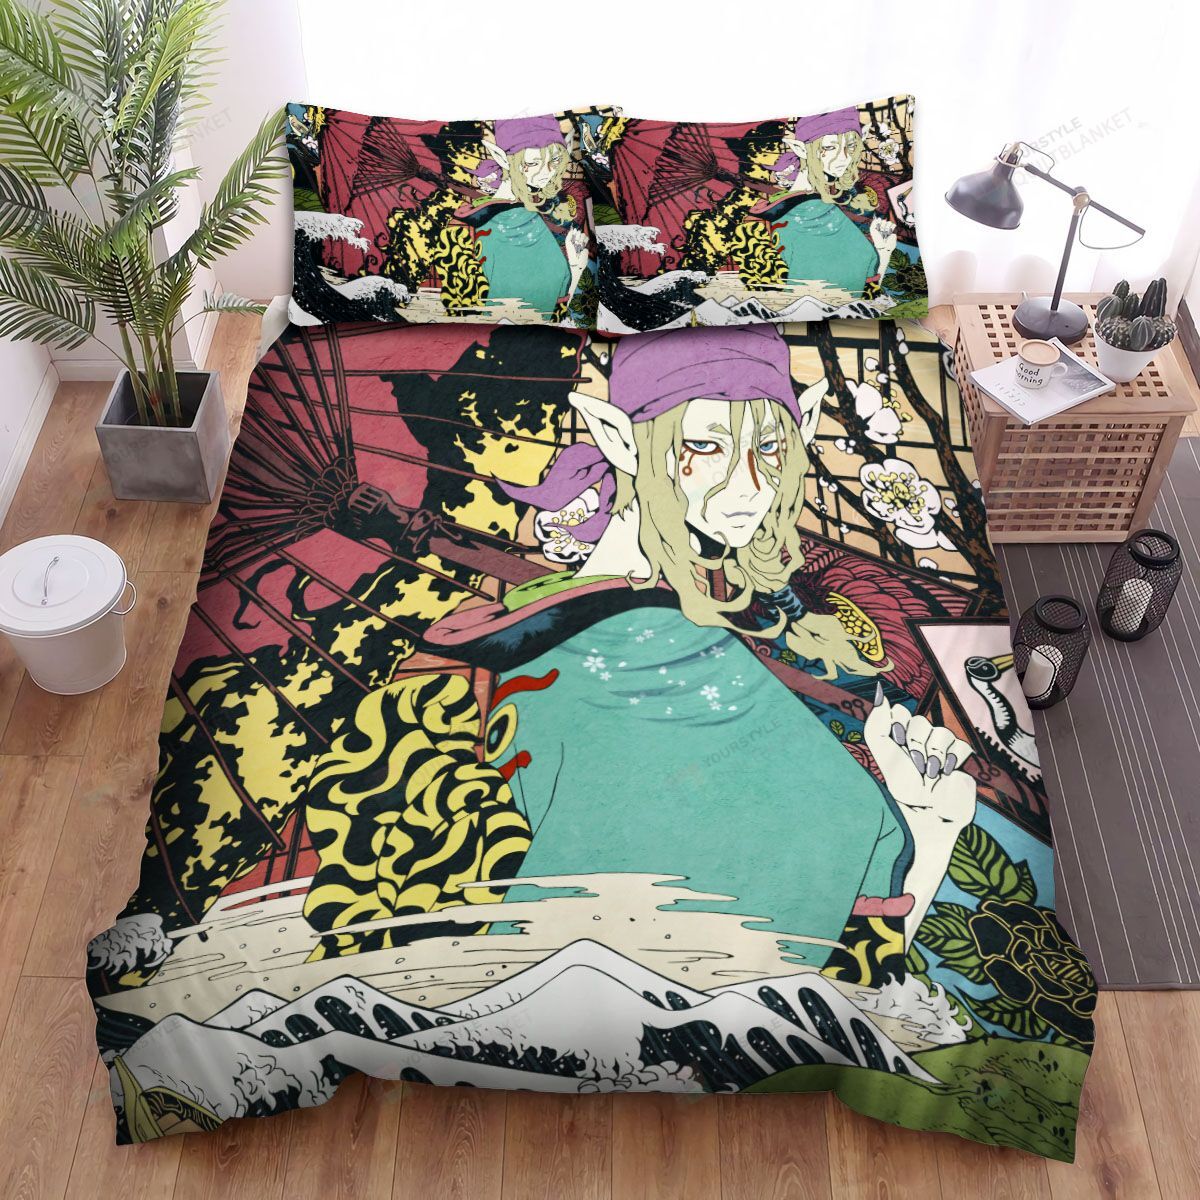 Mononoke Medicine Seller Anime Japan Art Bed Sheets Spread Comforter Duvet Cover Bedding Sets